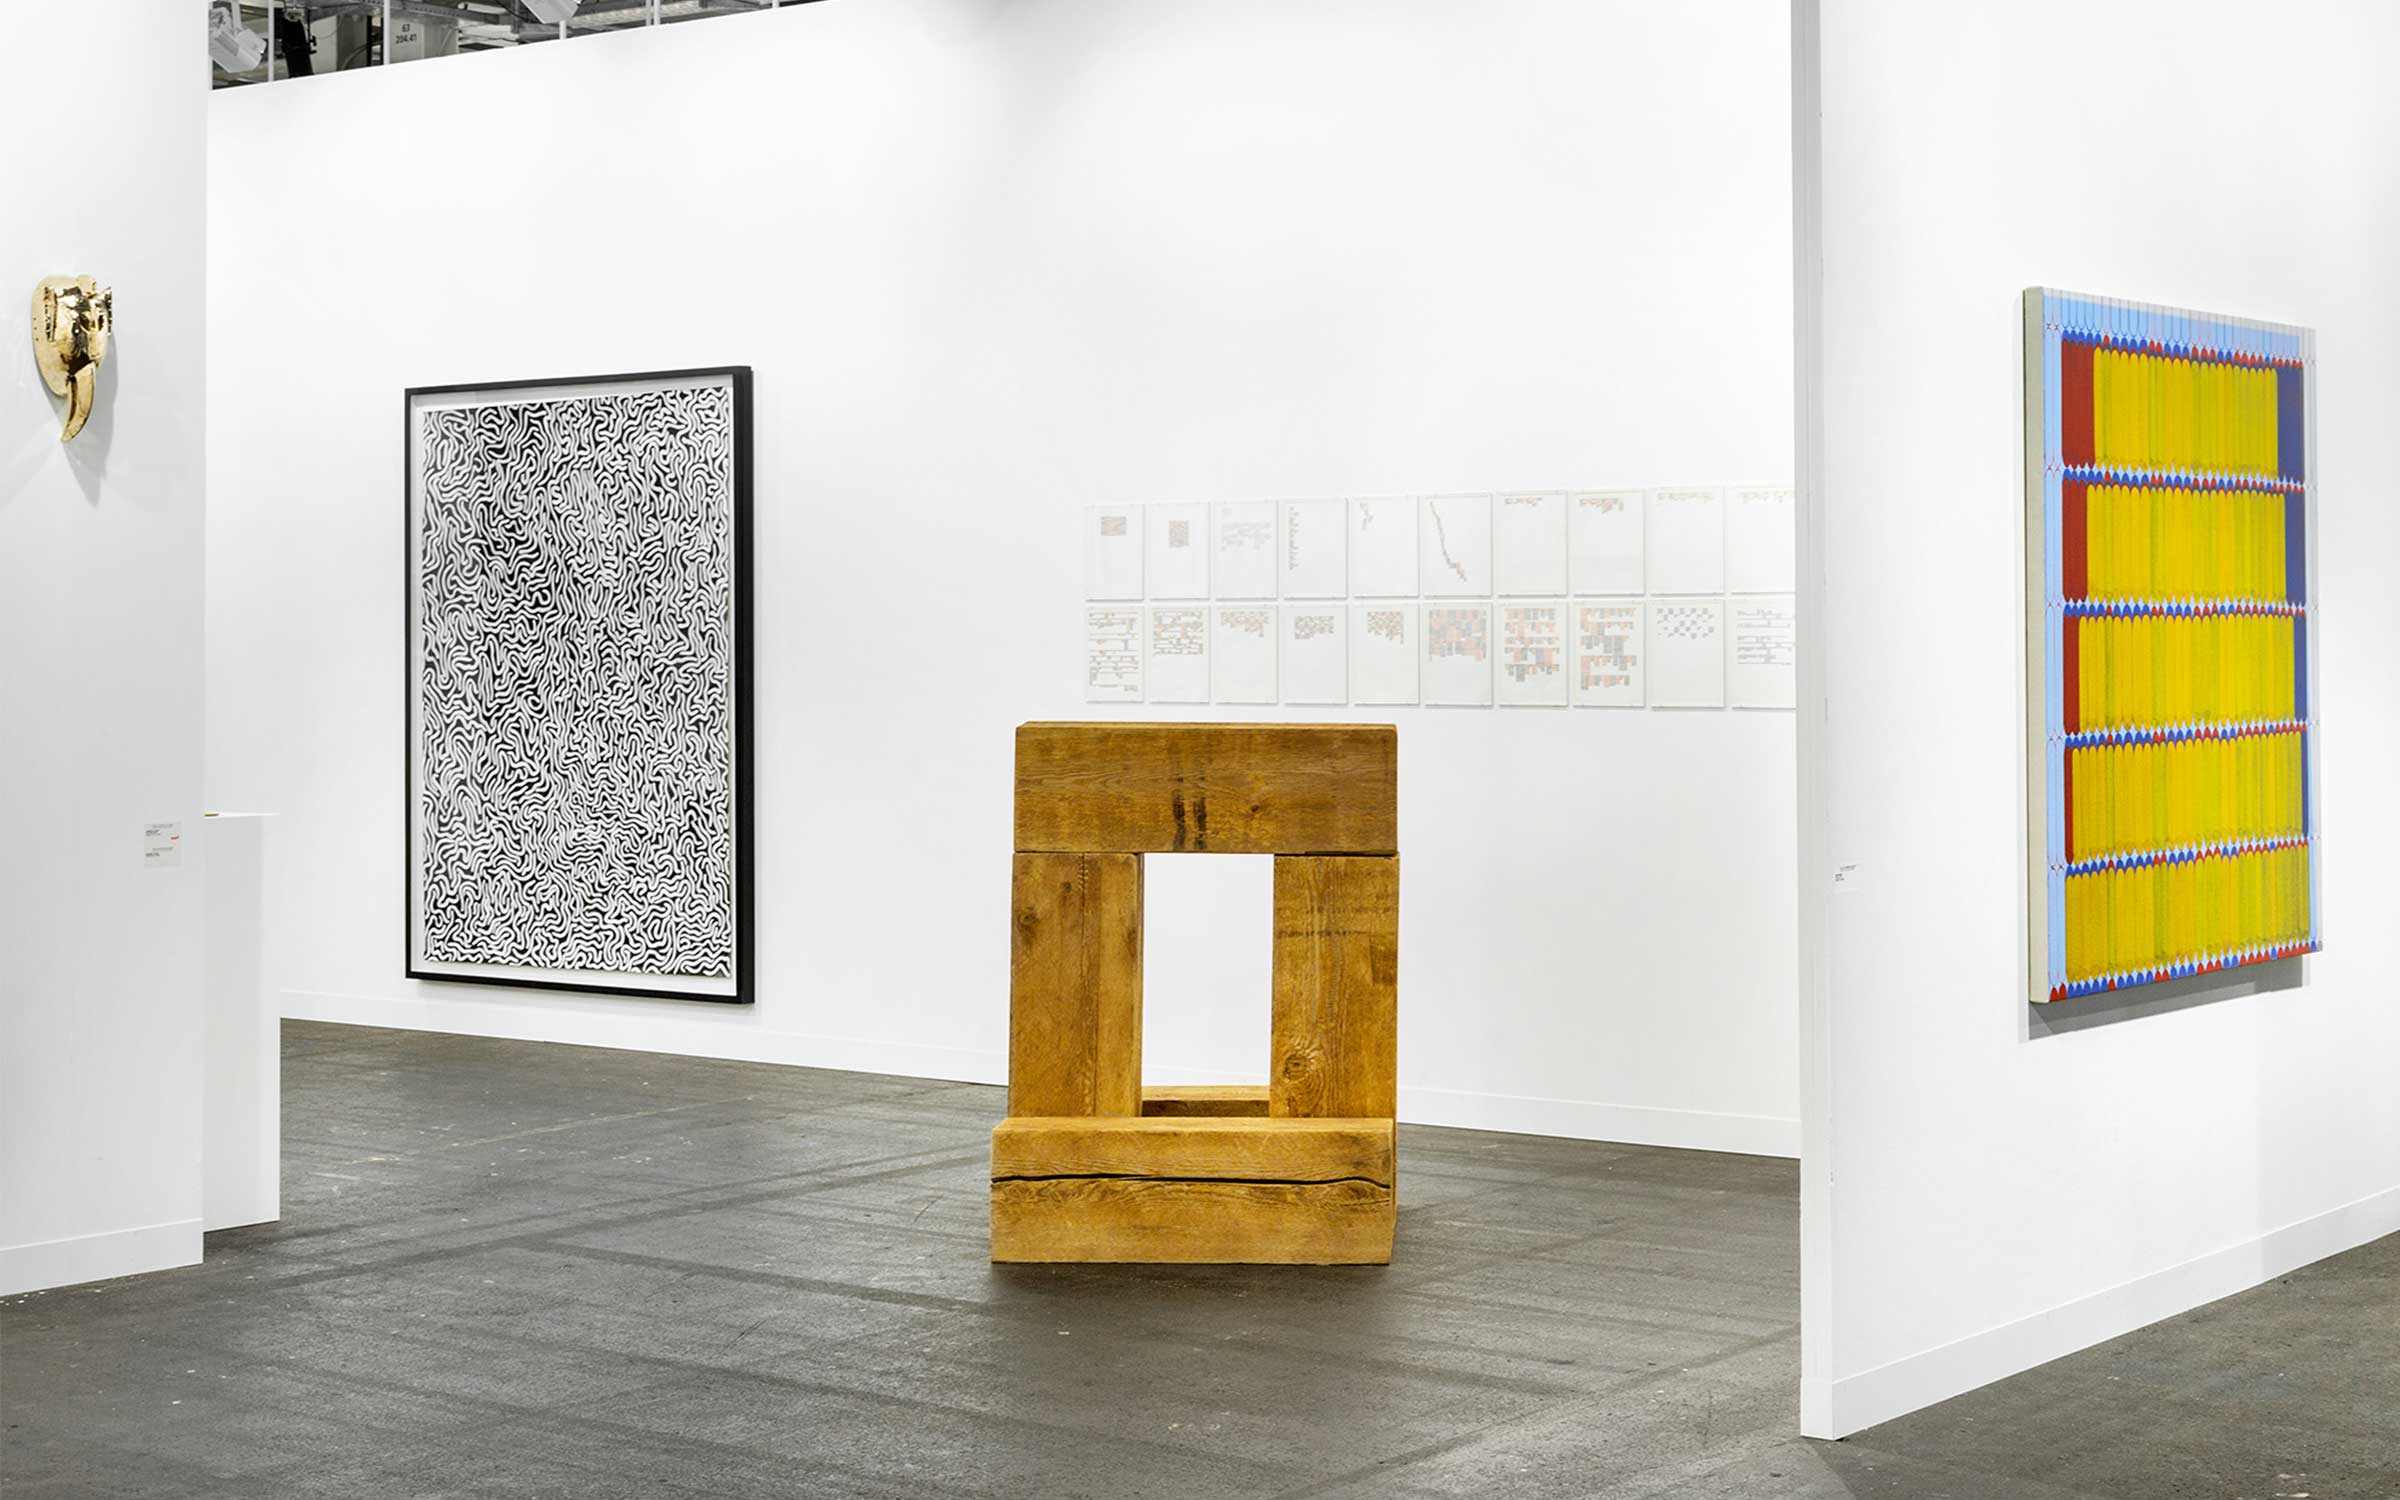 Paula Cooper Gallery at Art Basel in Basel, 2014